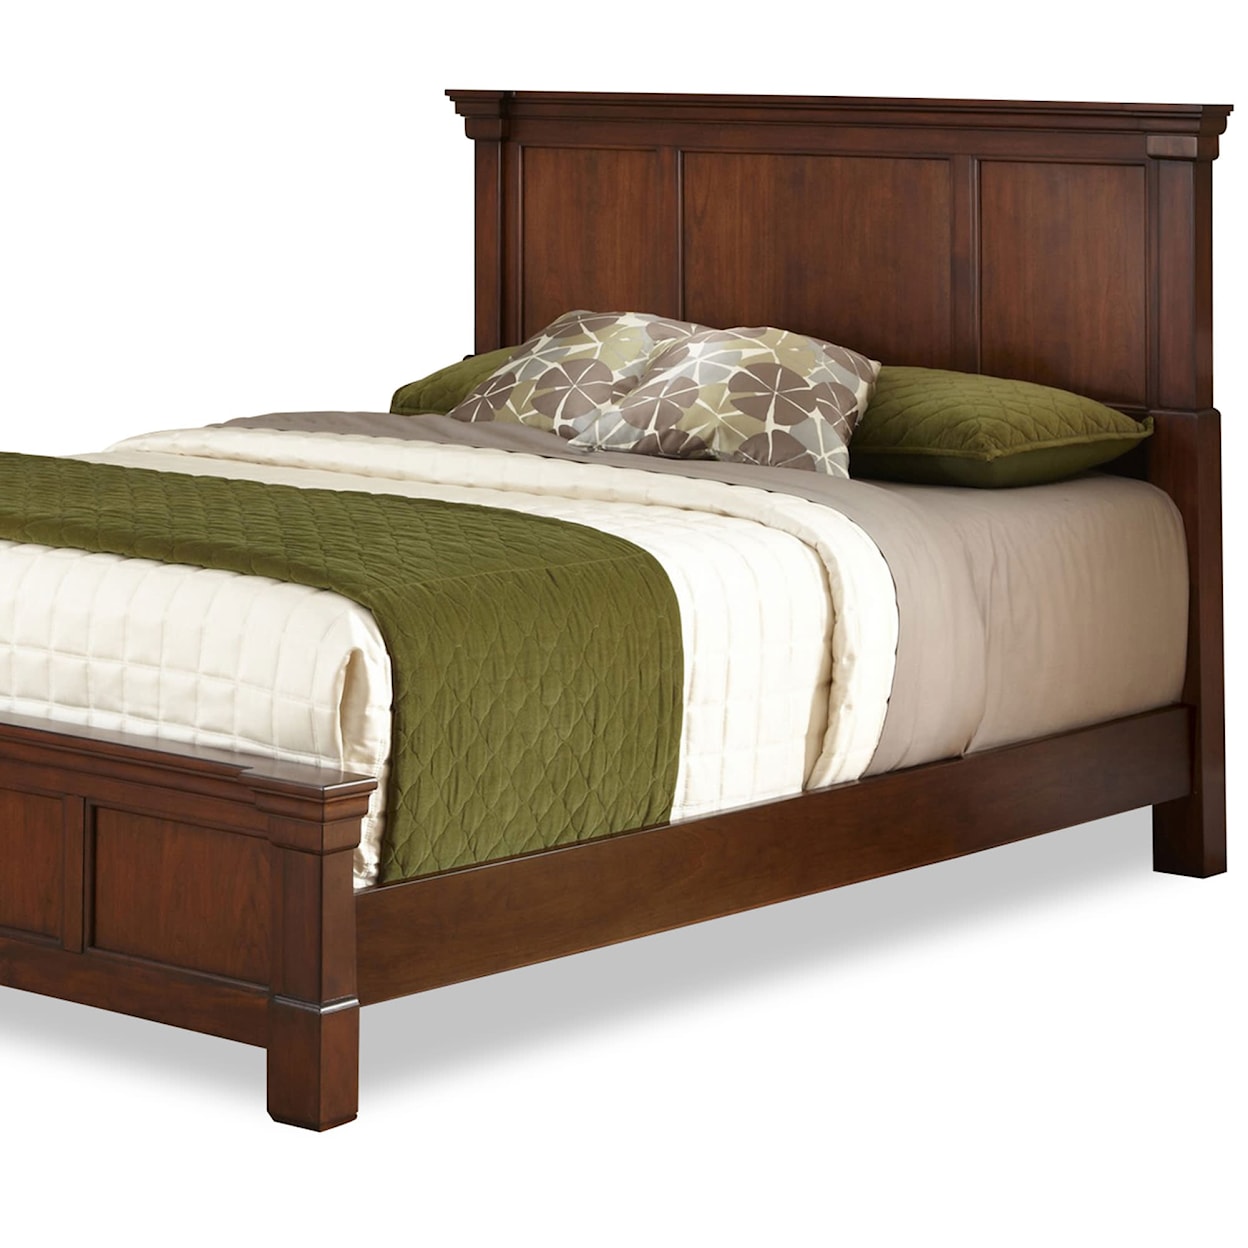 homestyles Aspen King Bed